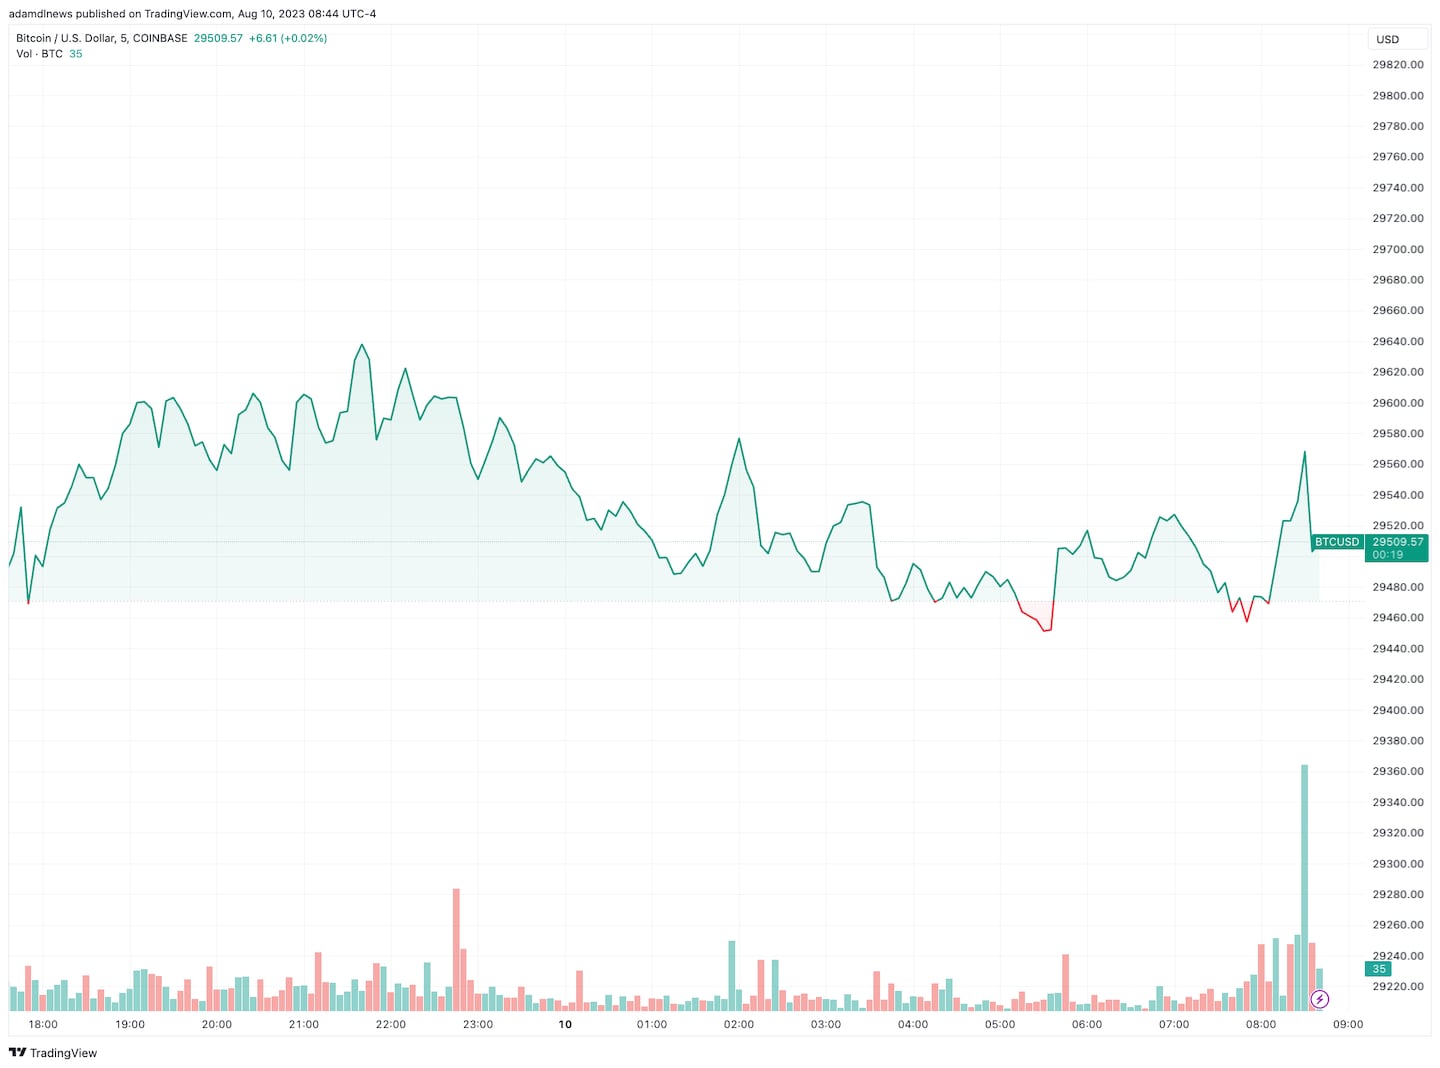 Bitcoin price chart via TradingView